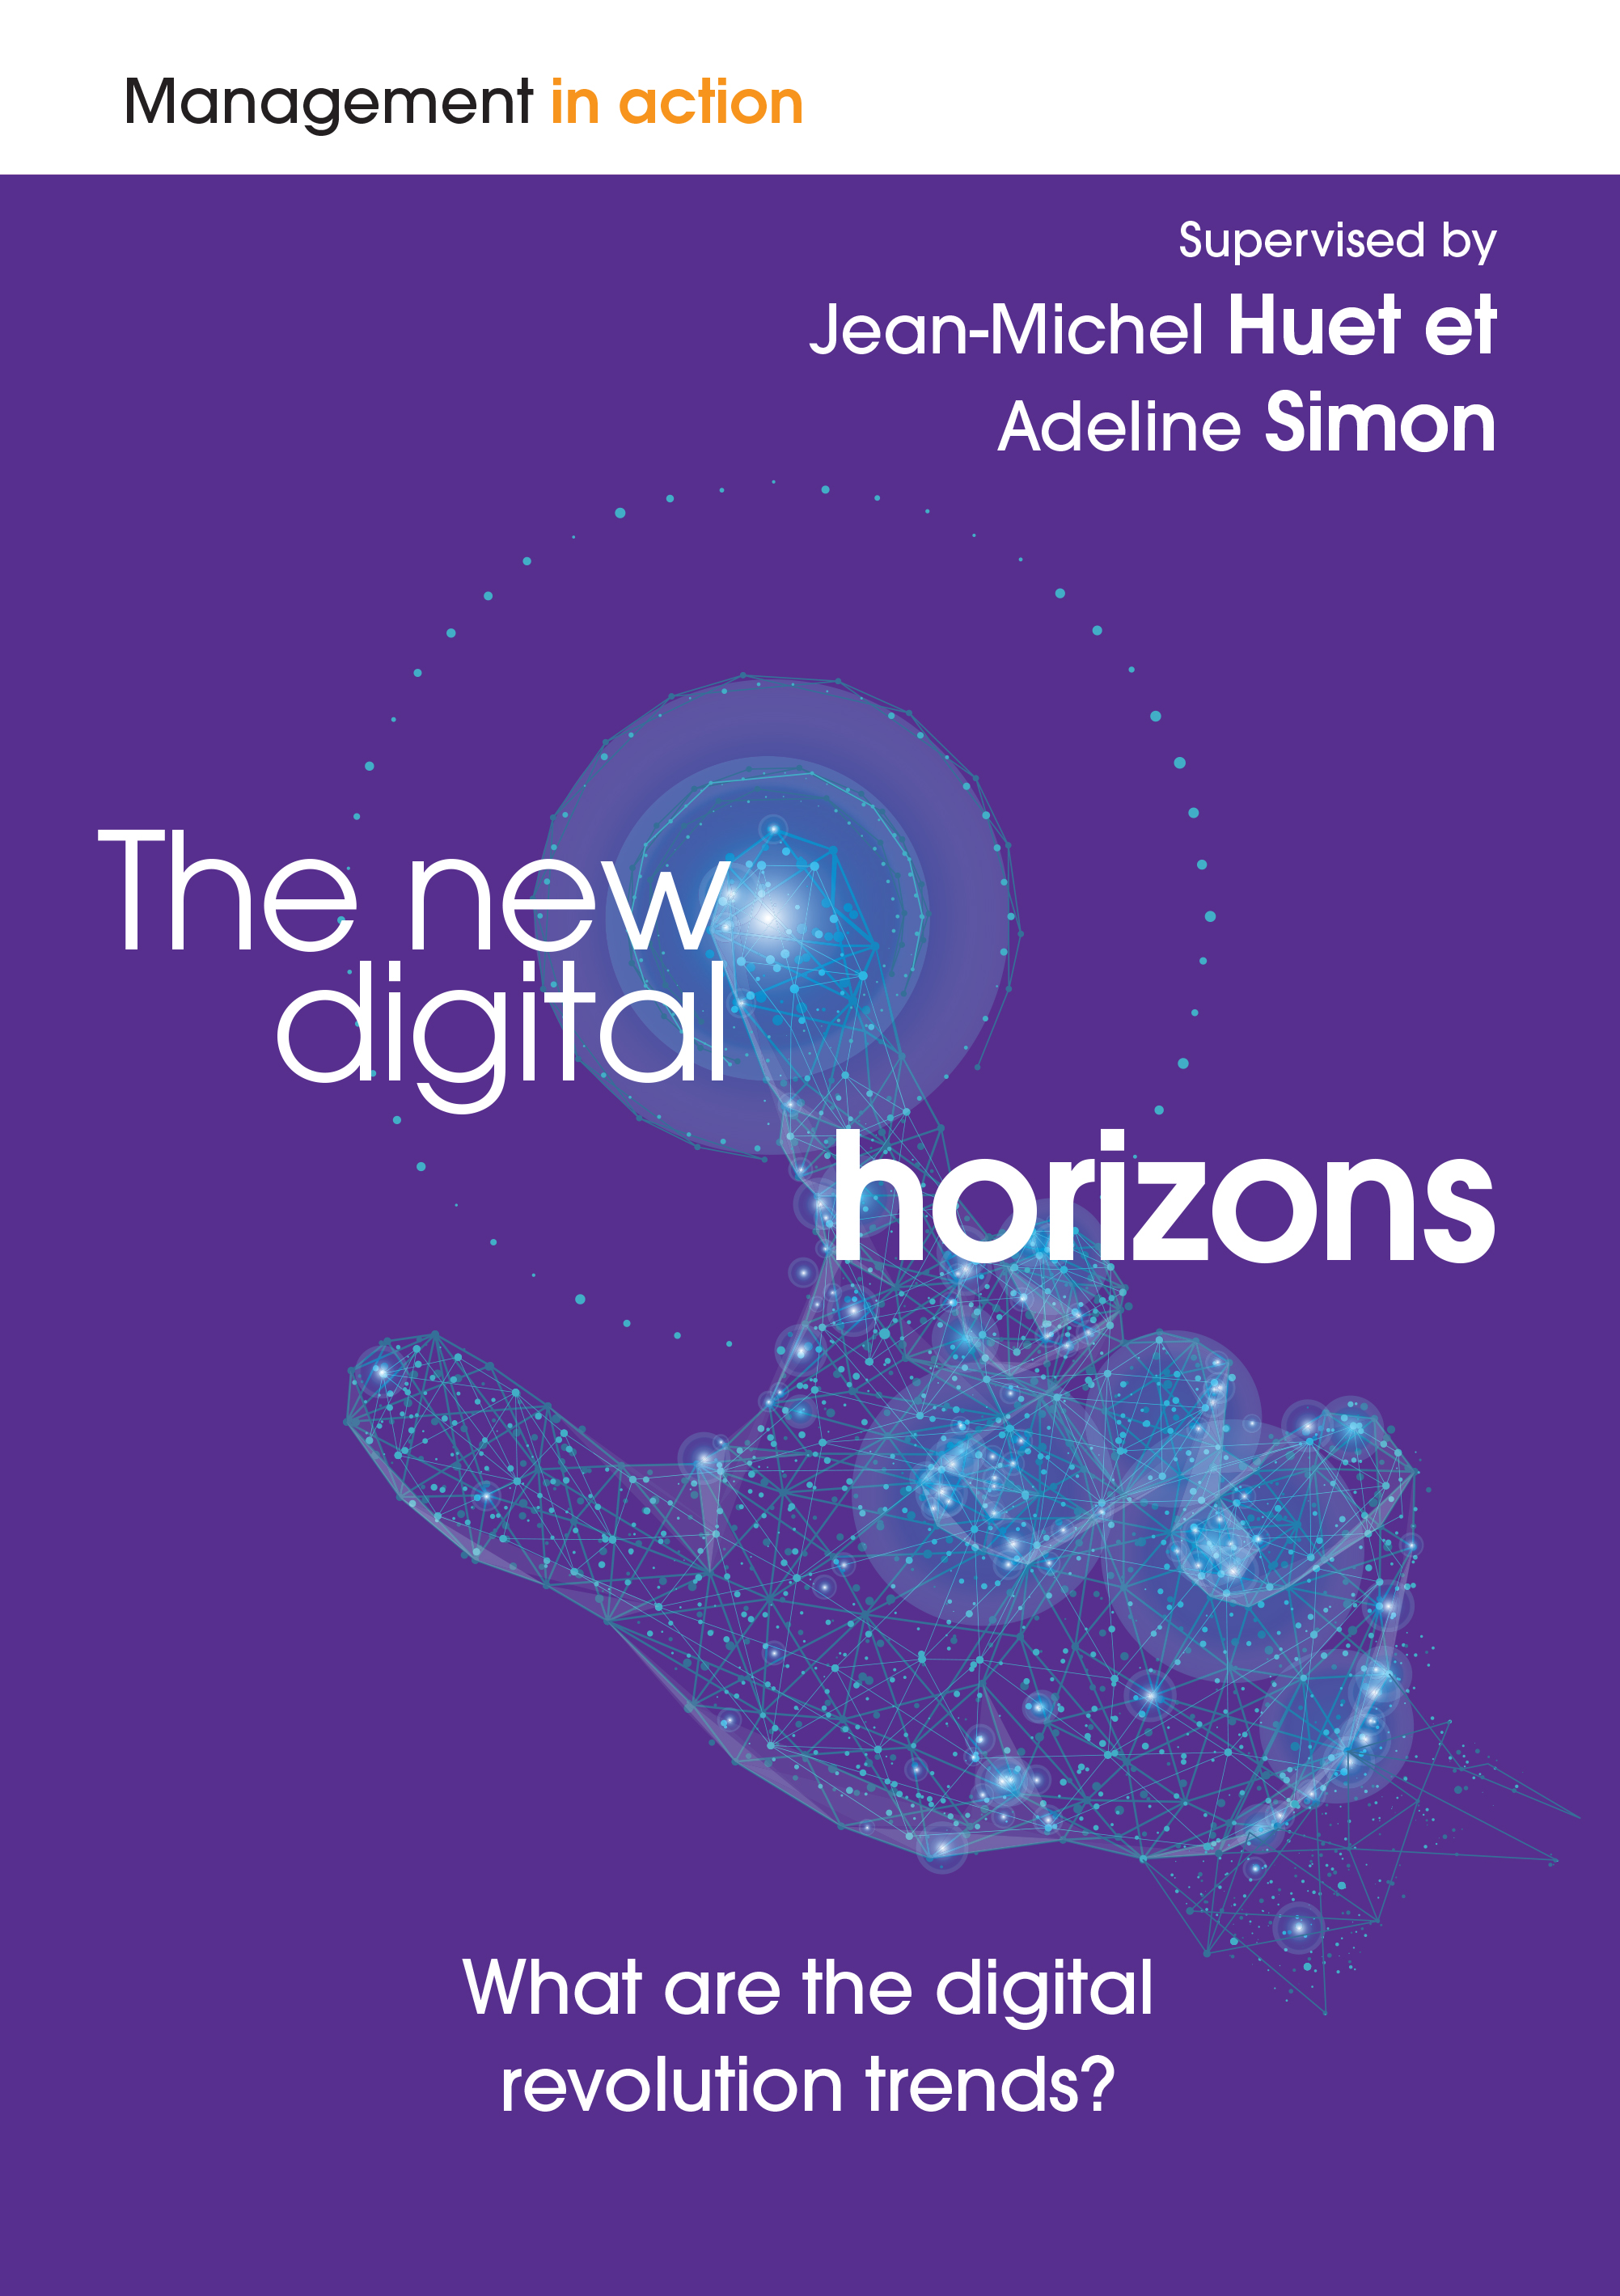 The new digital horizons - Jean-Michel Huet, Adeline Simon - Pearson